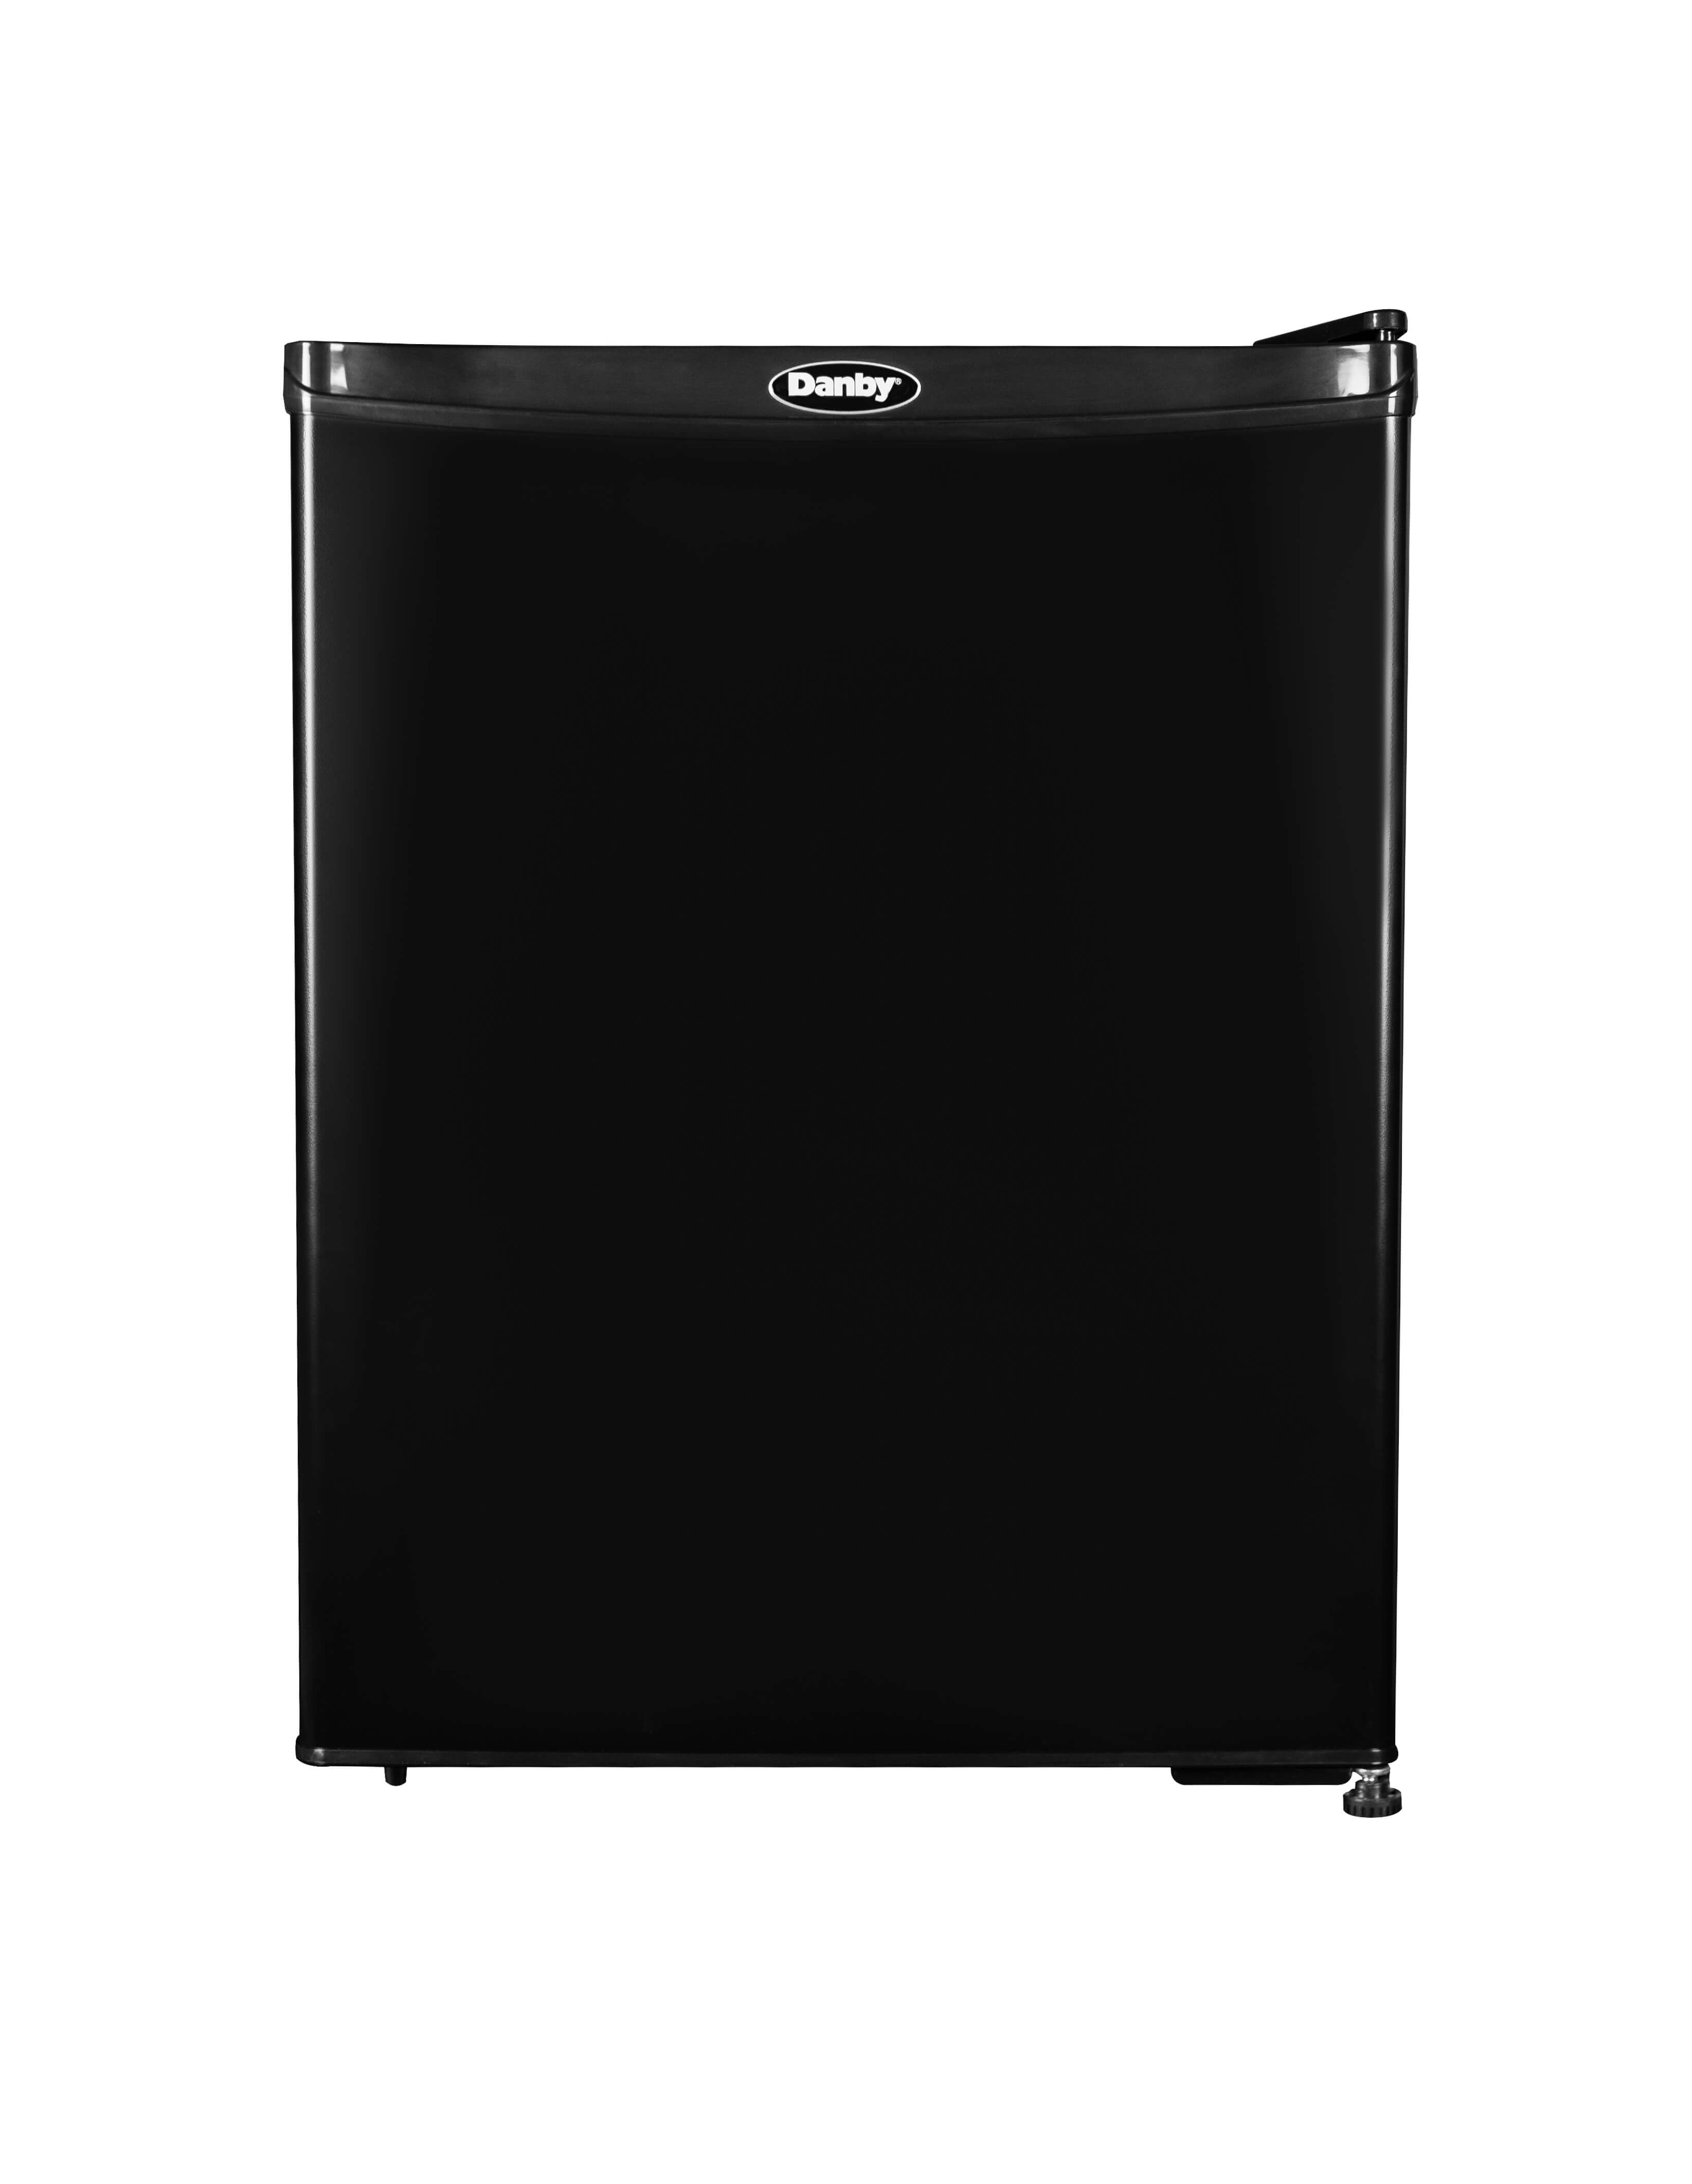 Danby 2.2 cu. ft. Compact Refrigerator